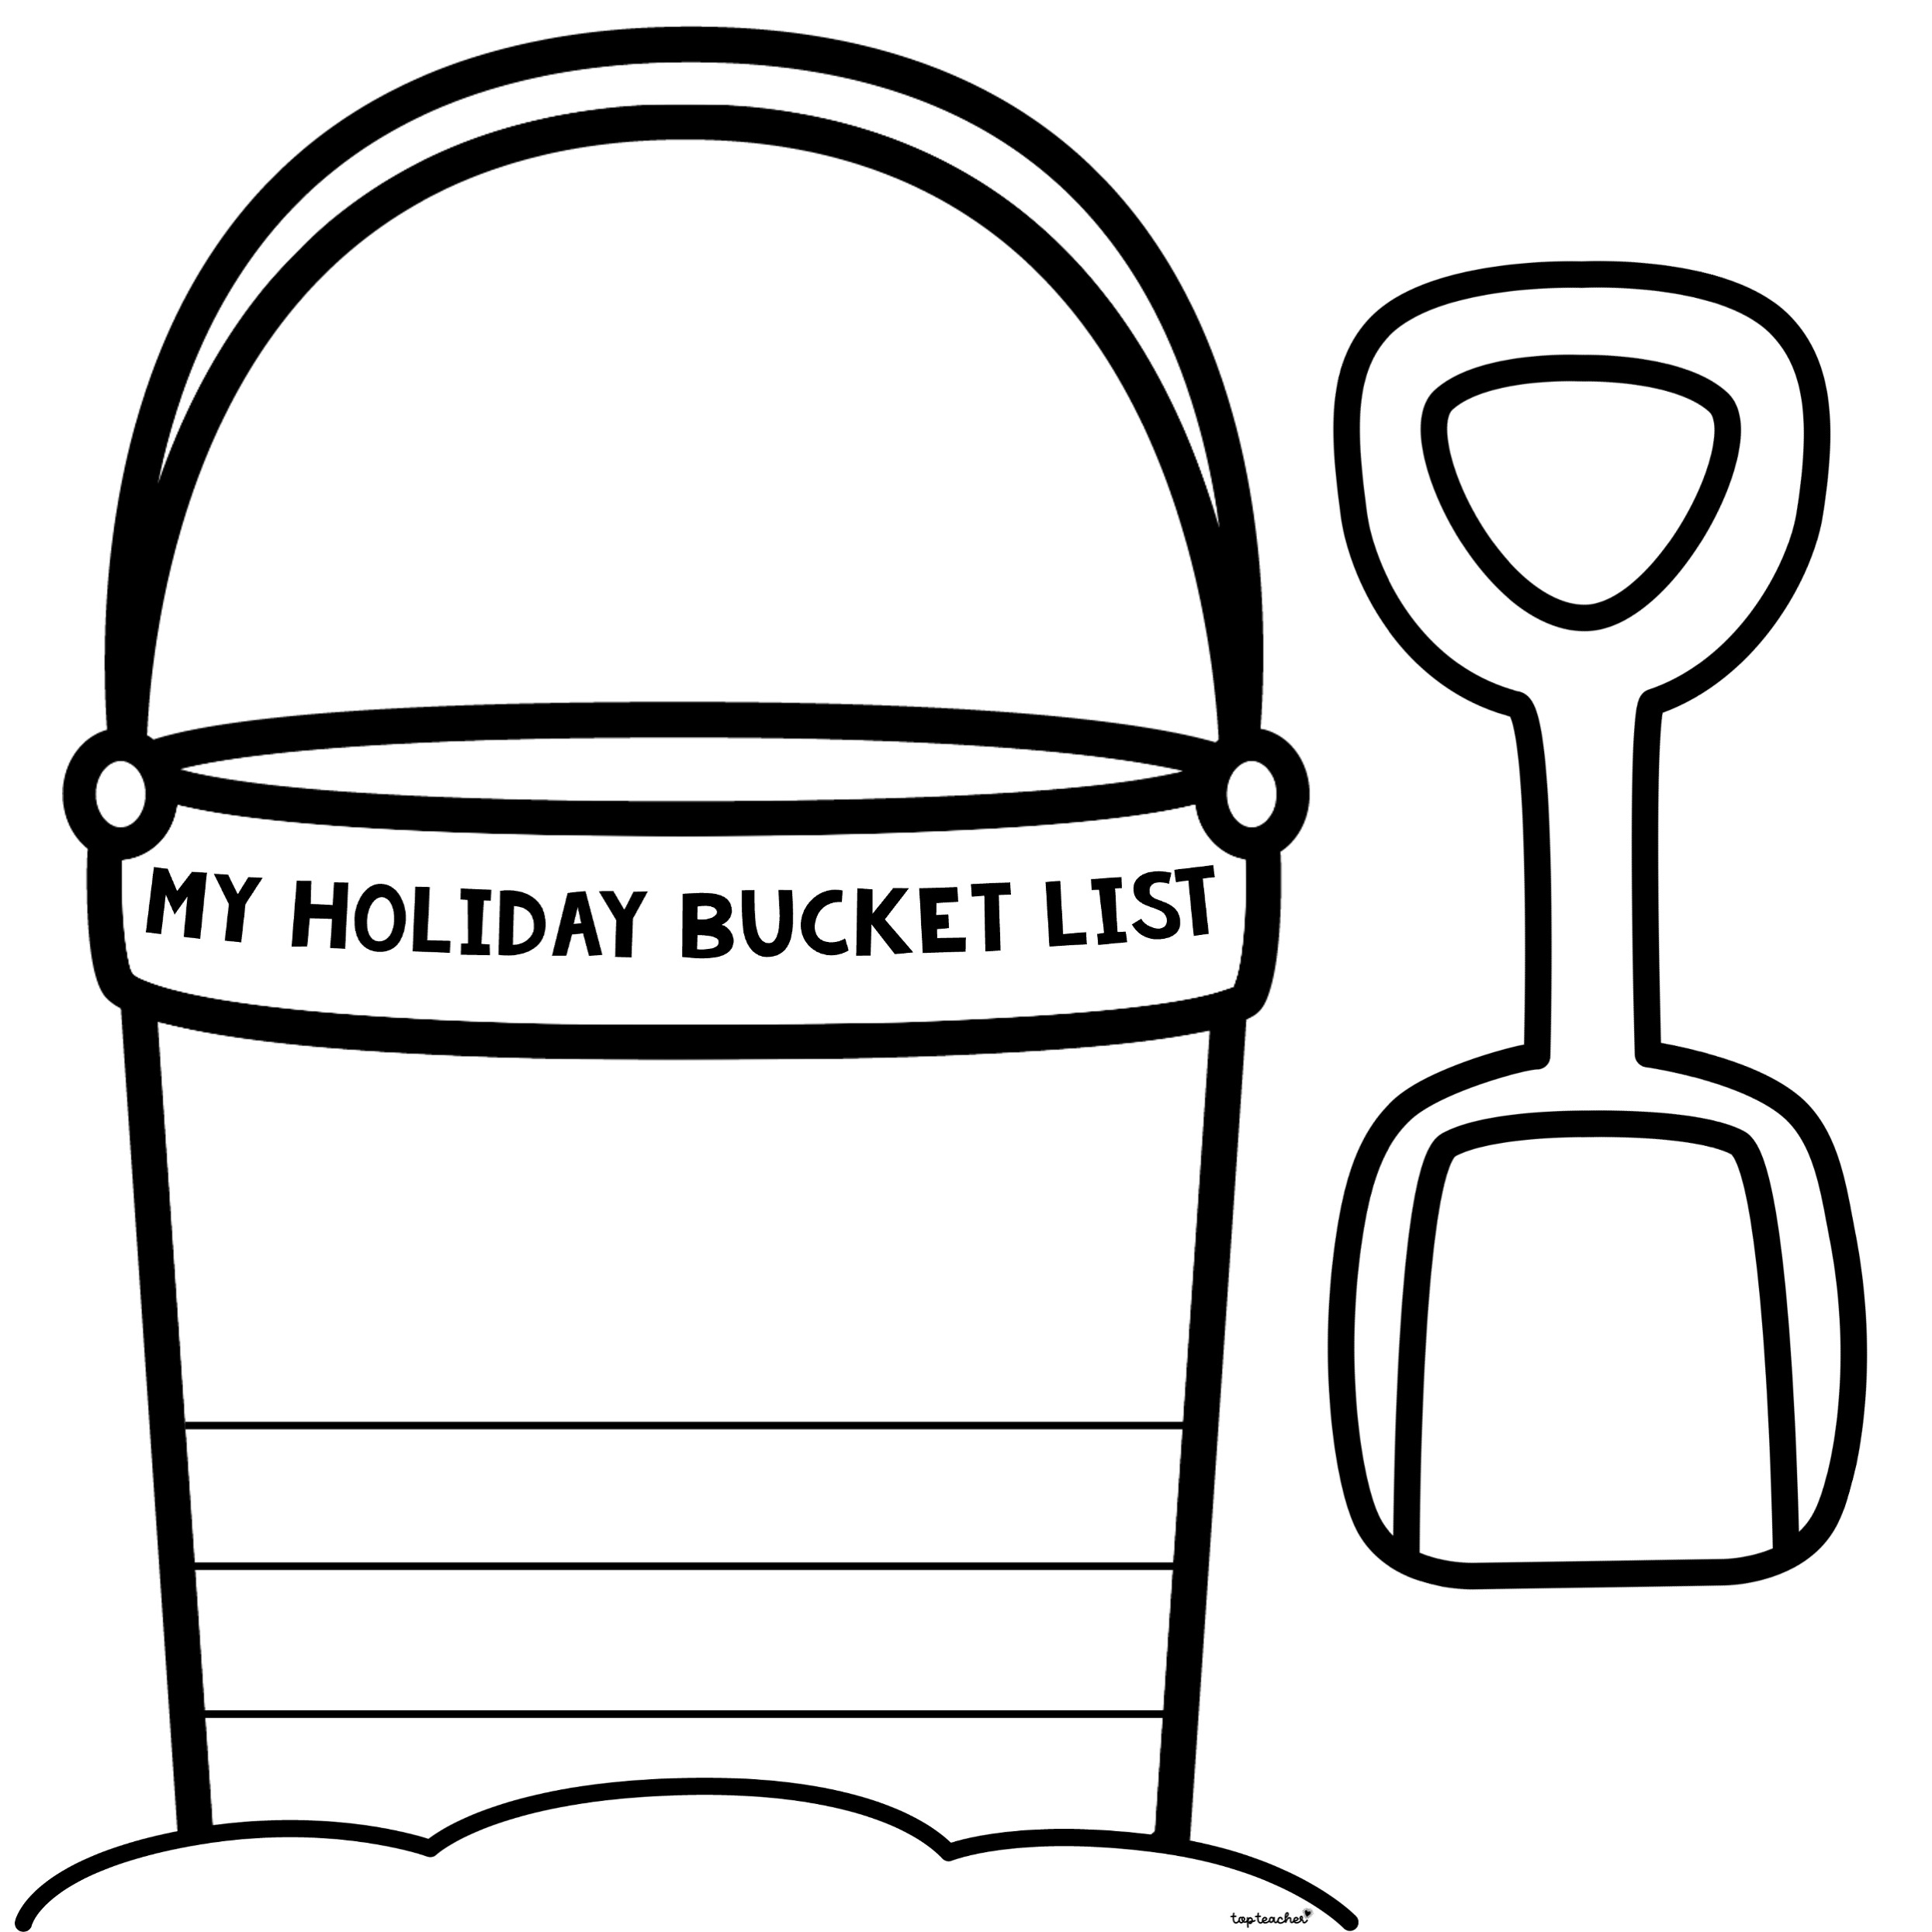 My holiday bucket list craftivity